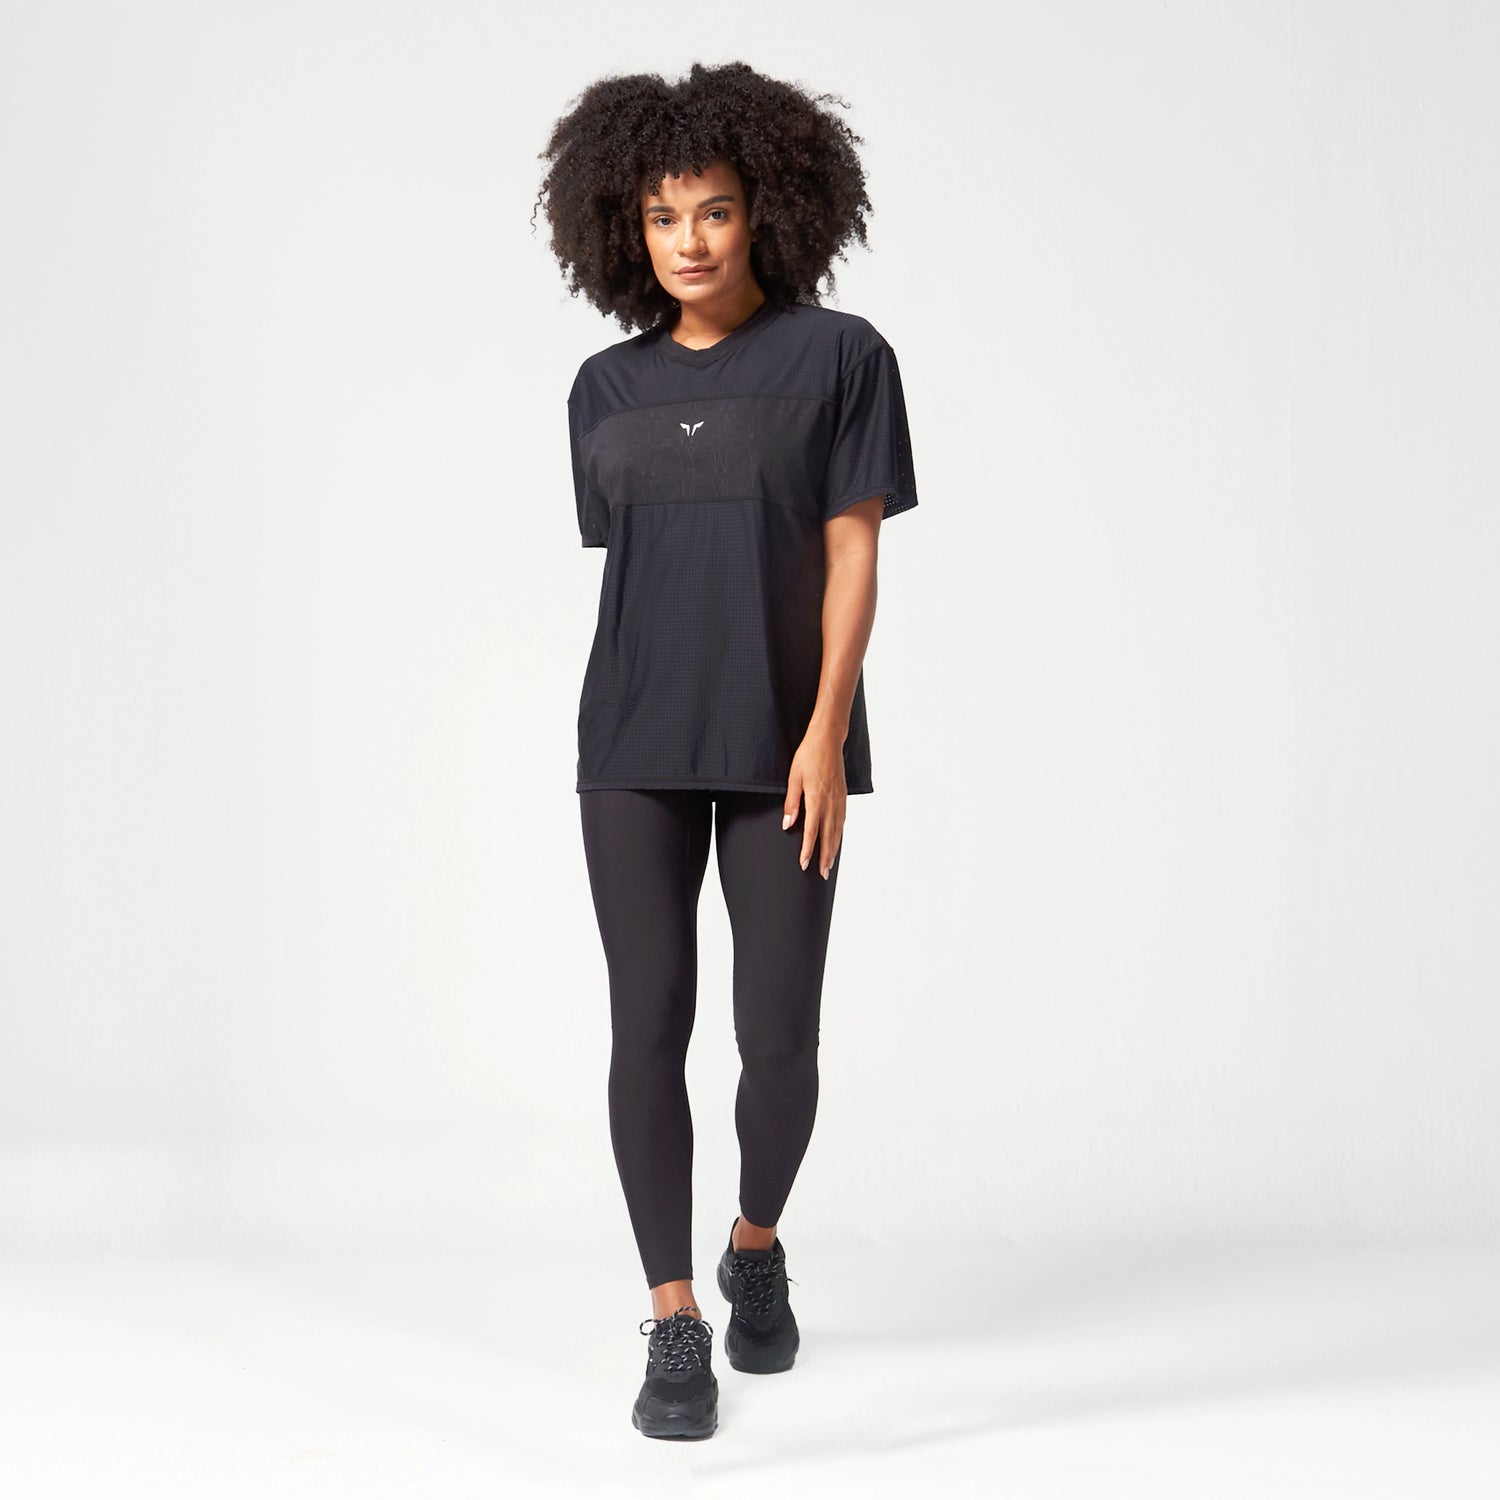 AE | Mesh Reversible Tee - Black | Workout Shirts Women | SQUATWOLF